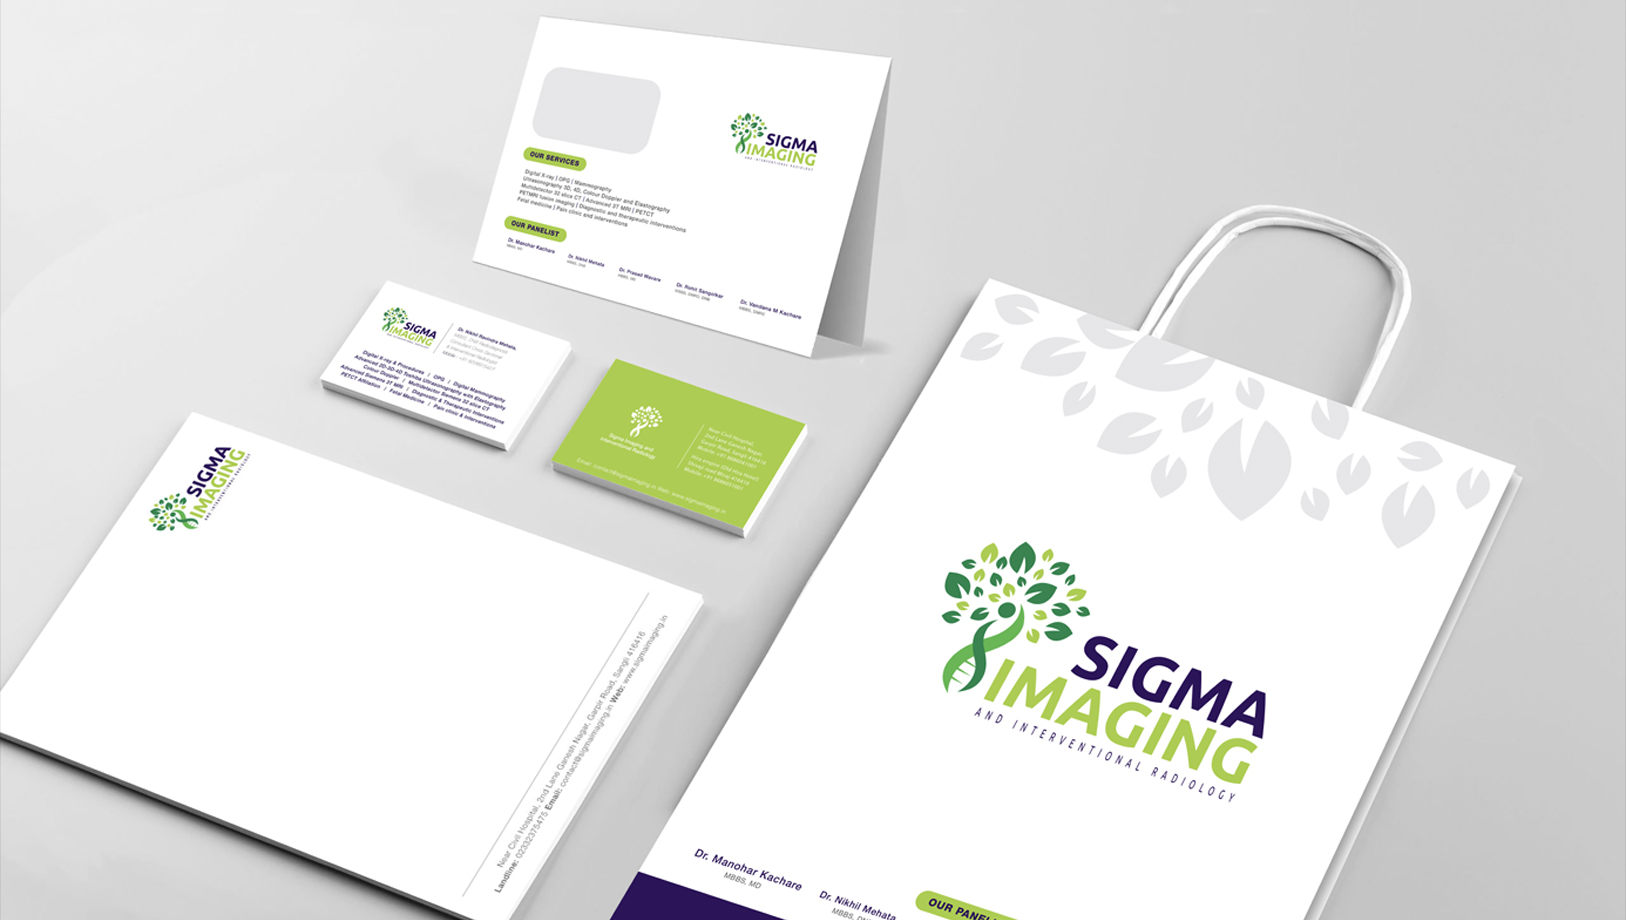 Sigma in-clinic